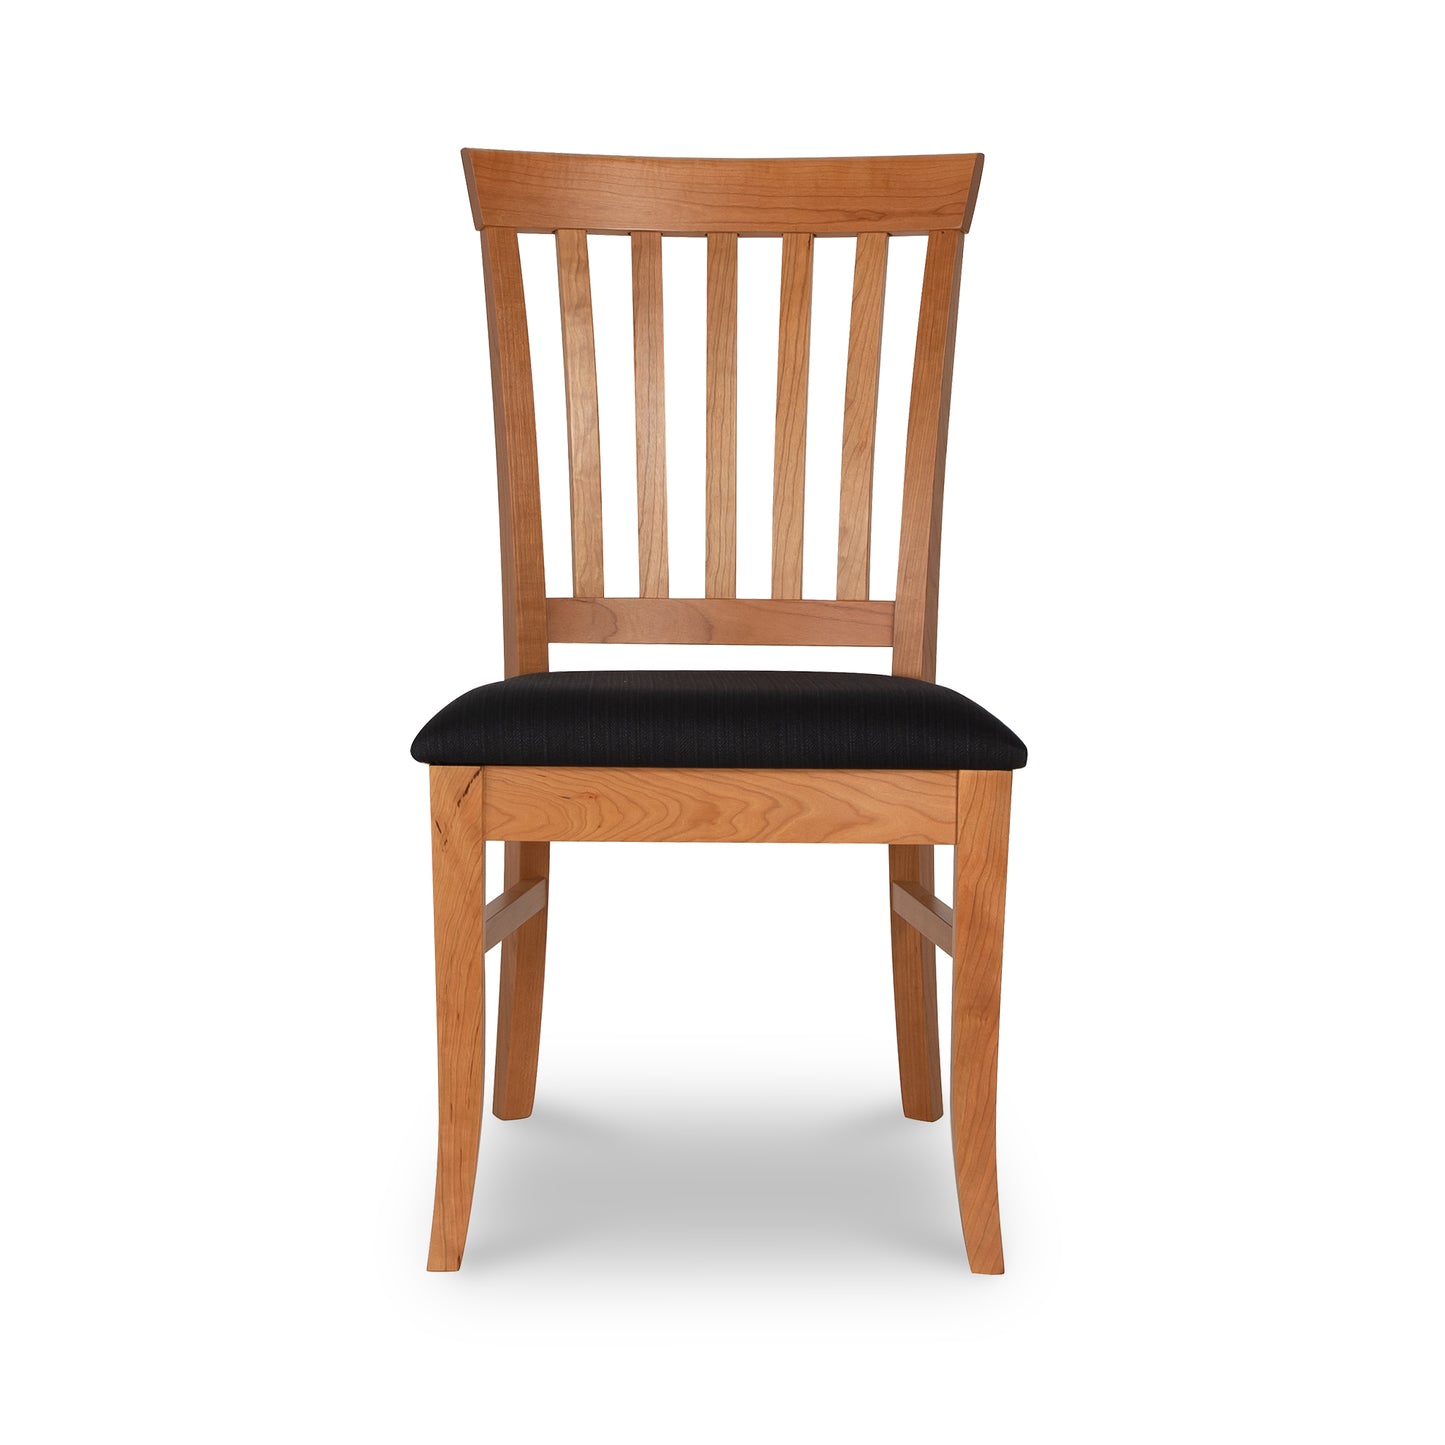 A handmade, Lyndon Furniture Bistro Dining Chair with a black cushion.